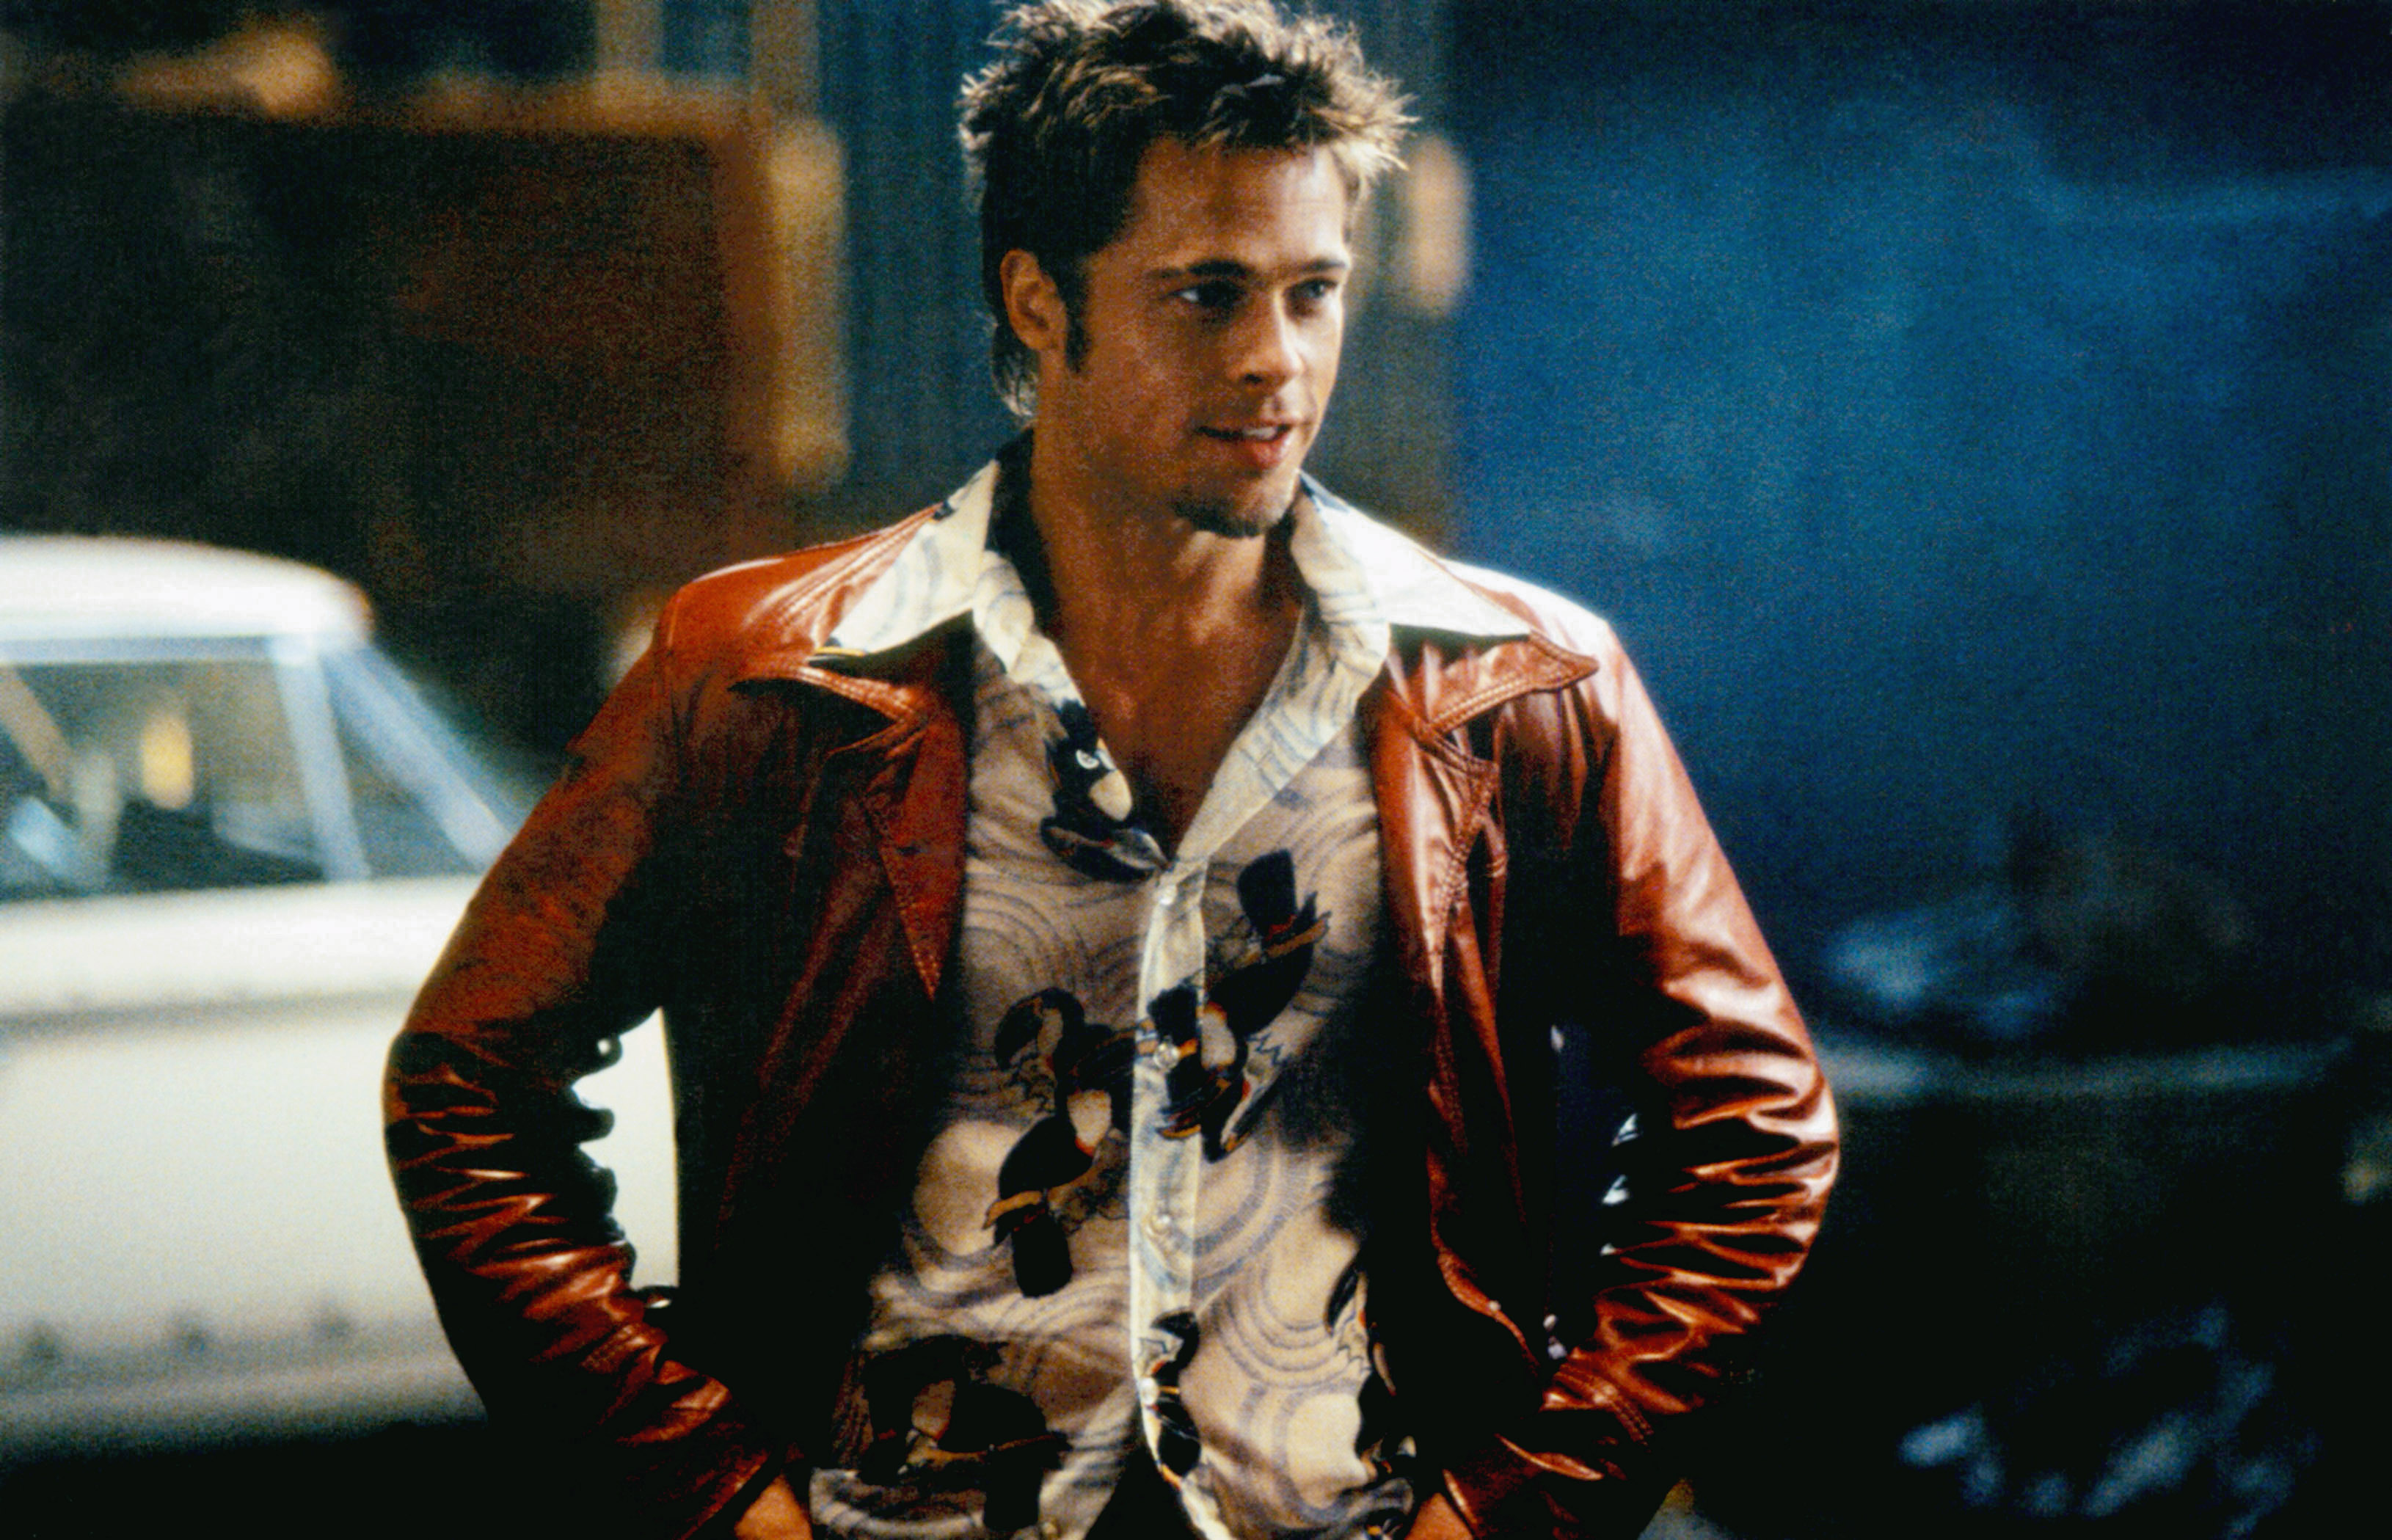 Brad Pitt in the movie Fight Club.